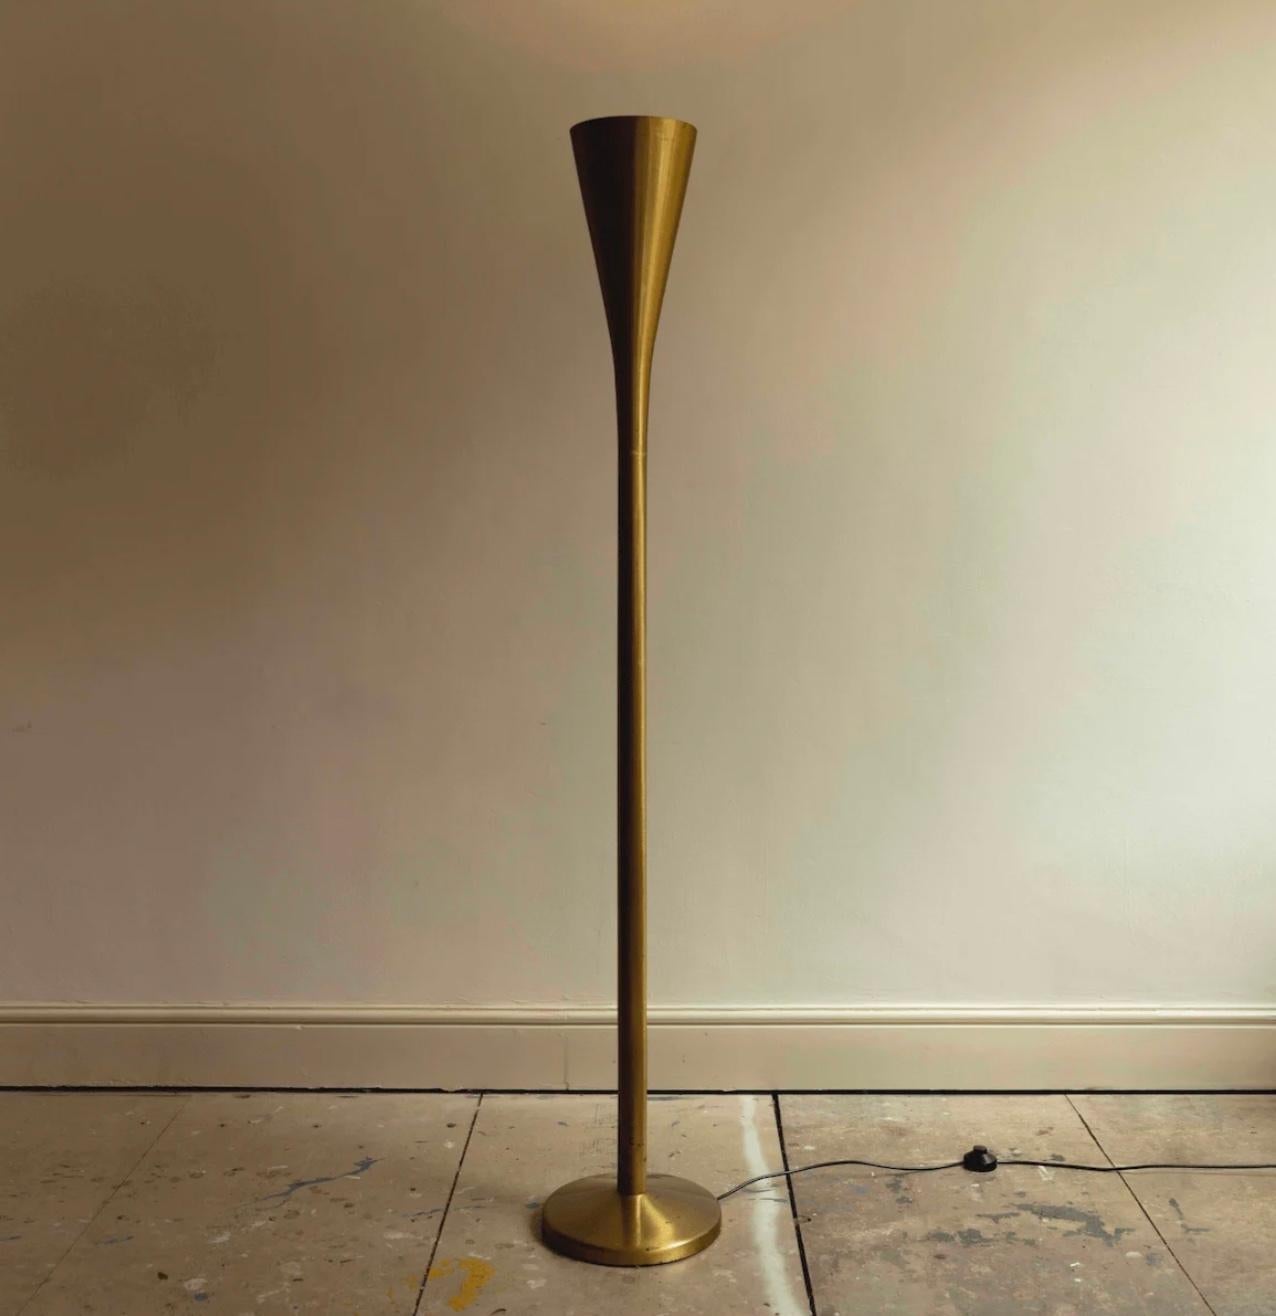 A lacquered brass ‘Luminator’ floor lamp, model no. 0556.

Designed by Pietro Chiesa for Fontana Arte. 

Italian c. 1933

Measure: H. 186cm